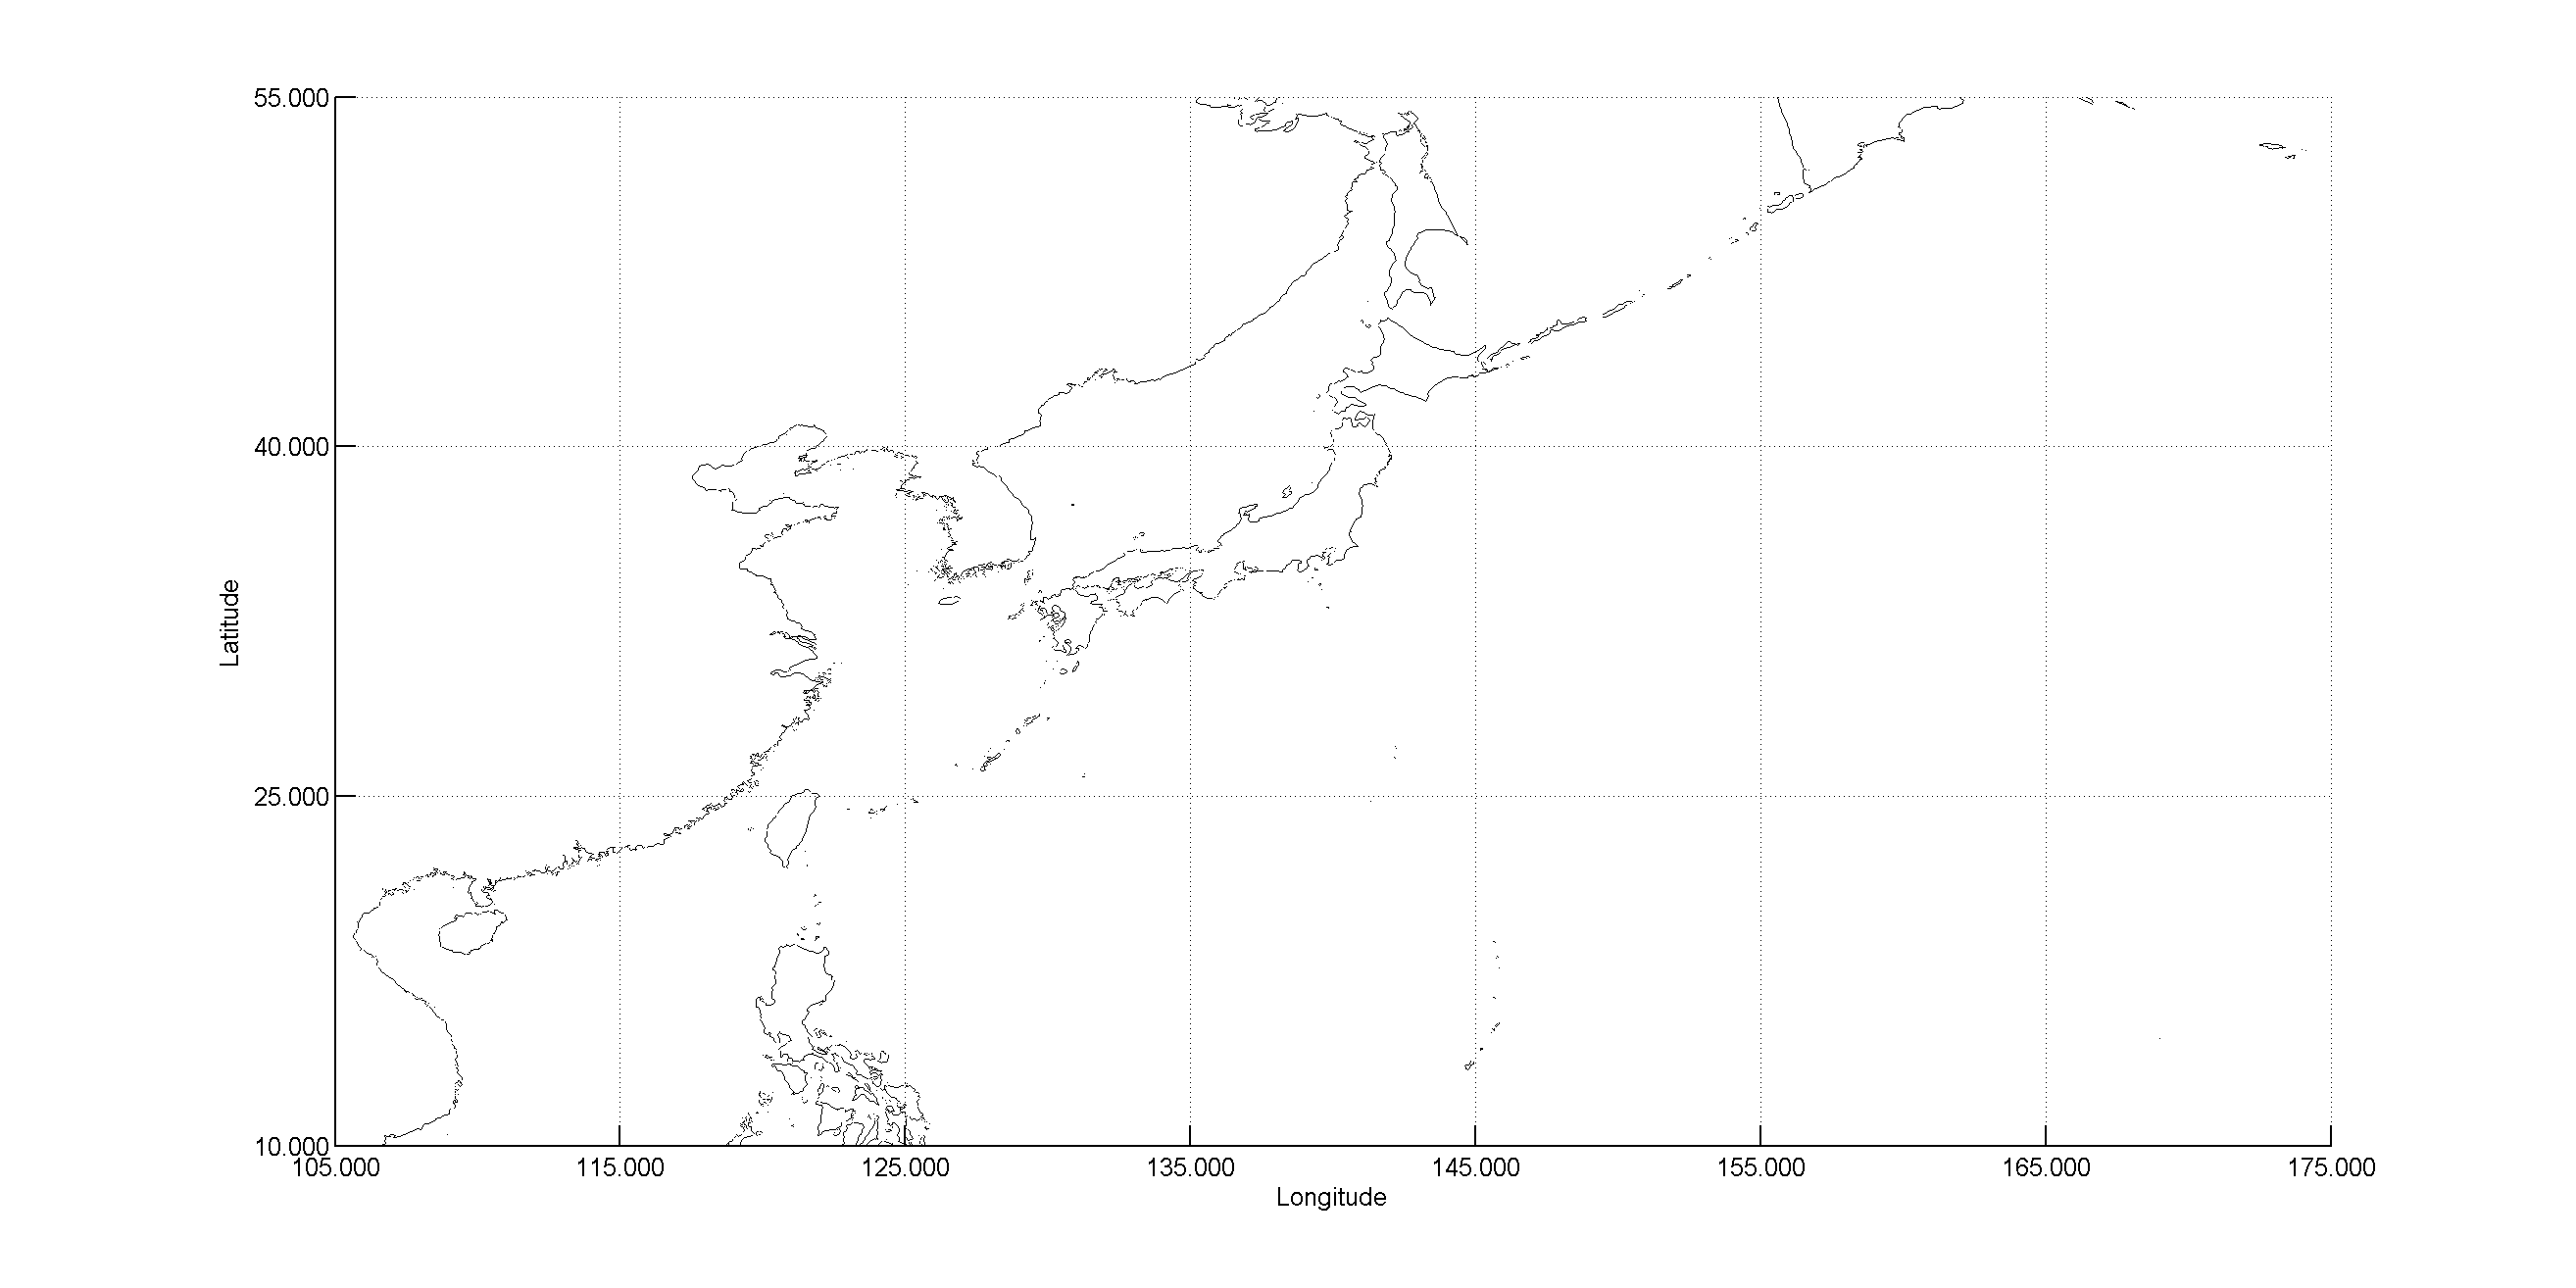 CYCLE_227 - Japan Ascending passes